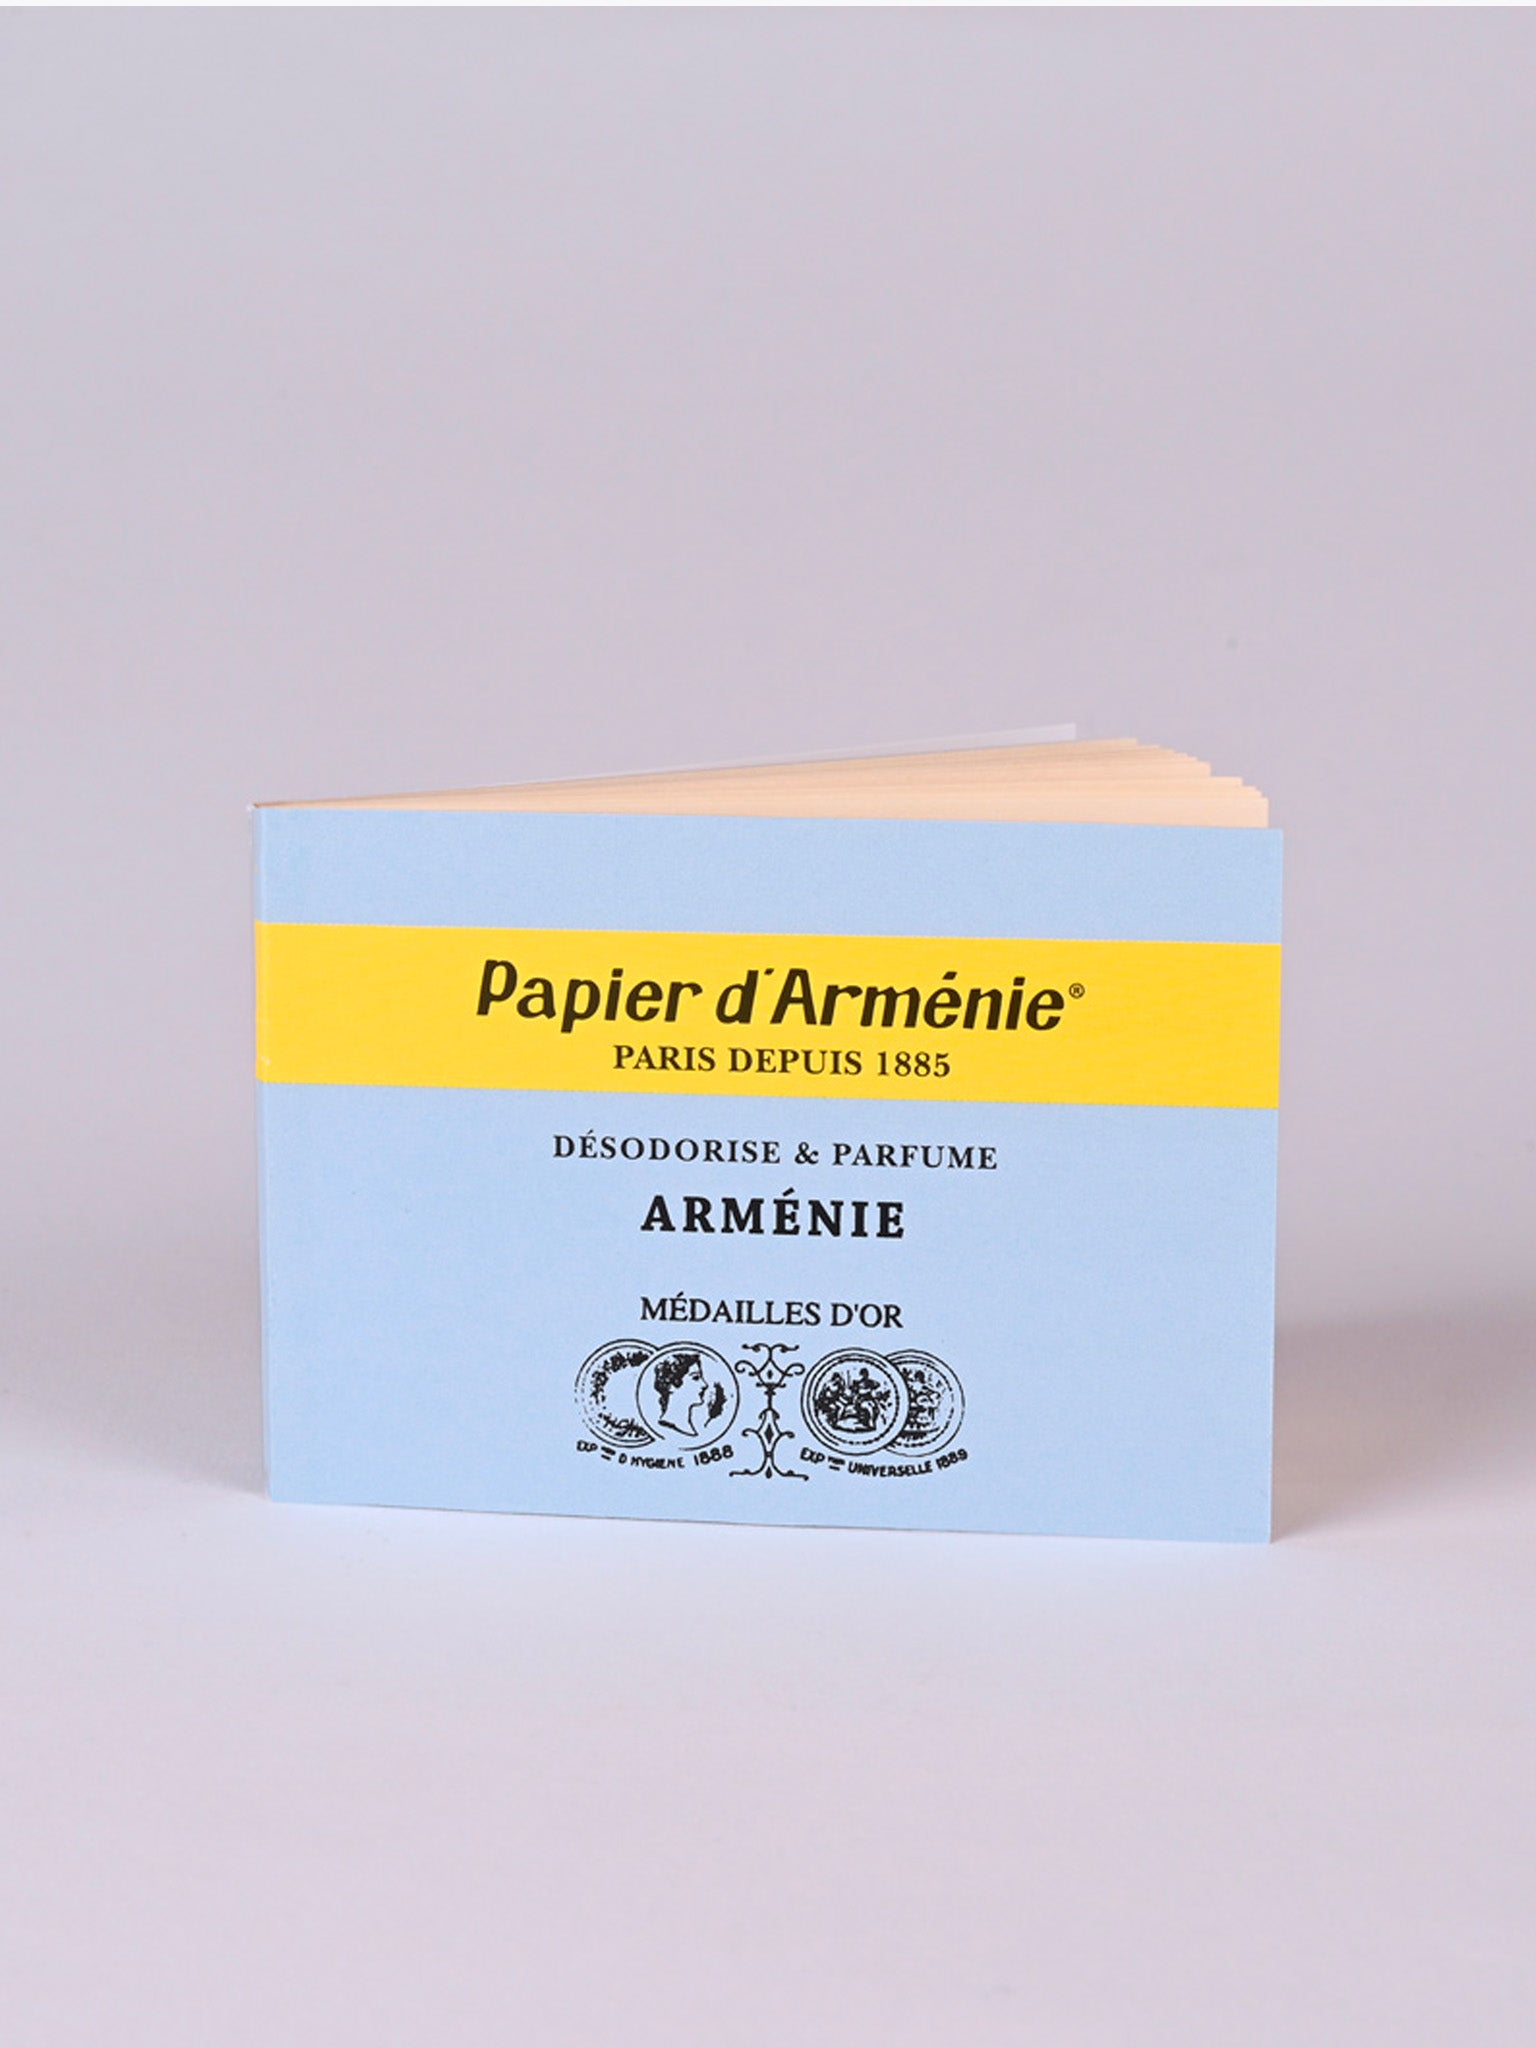 Papier d'Armenie TRADITION French Incense Paper 6 Booklets set